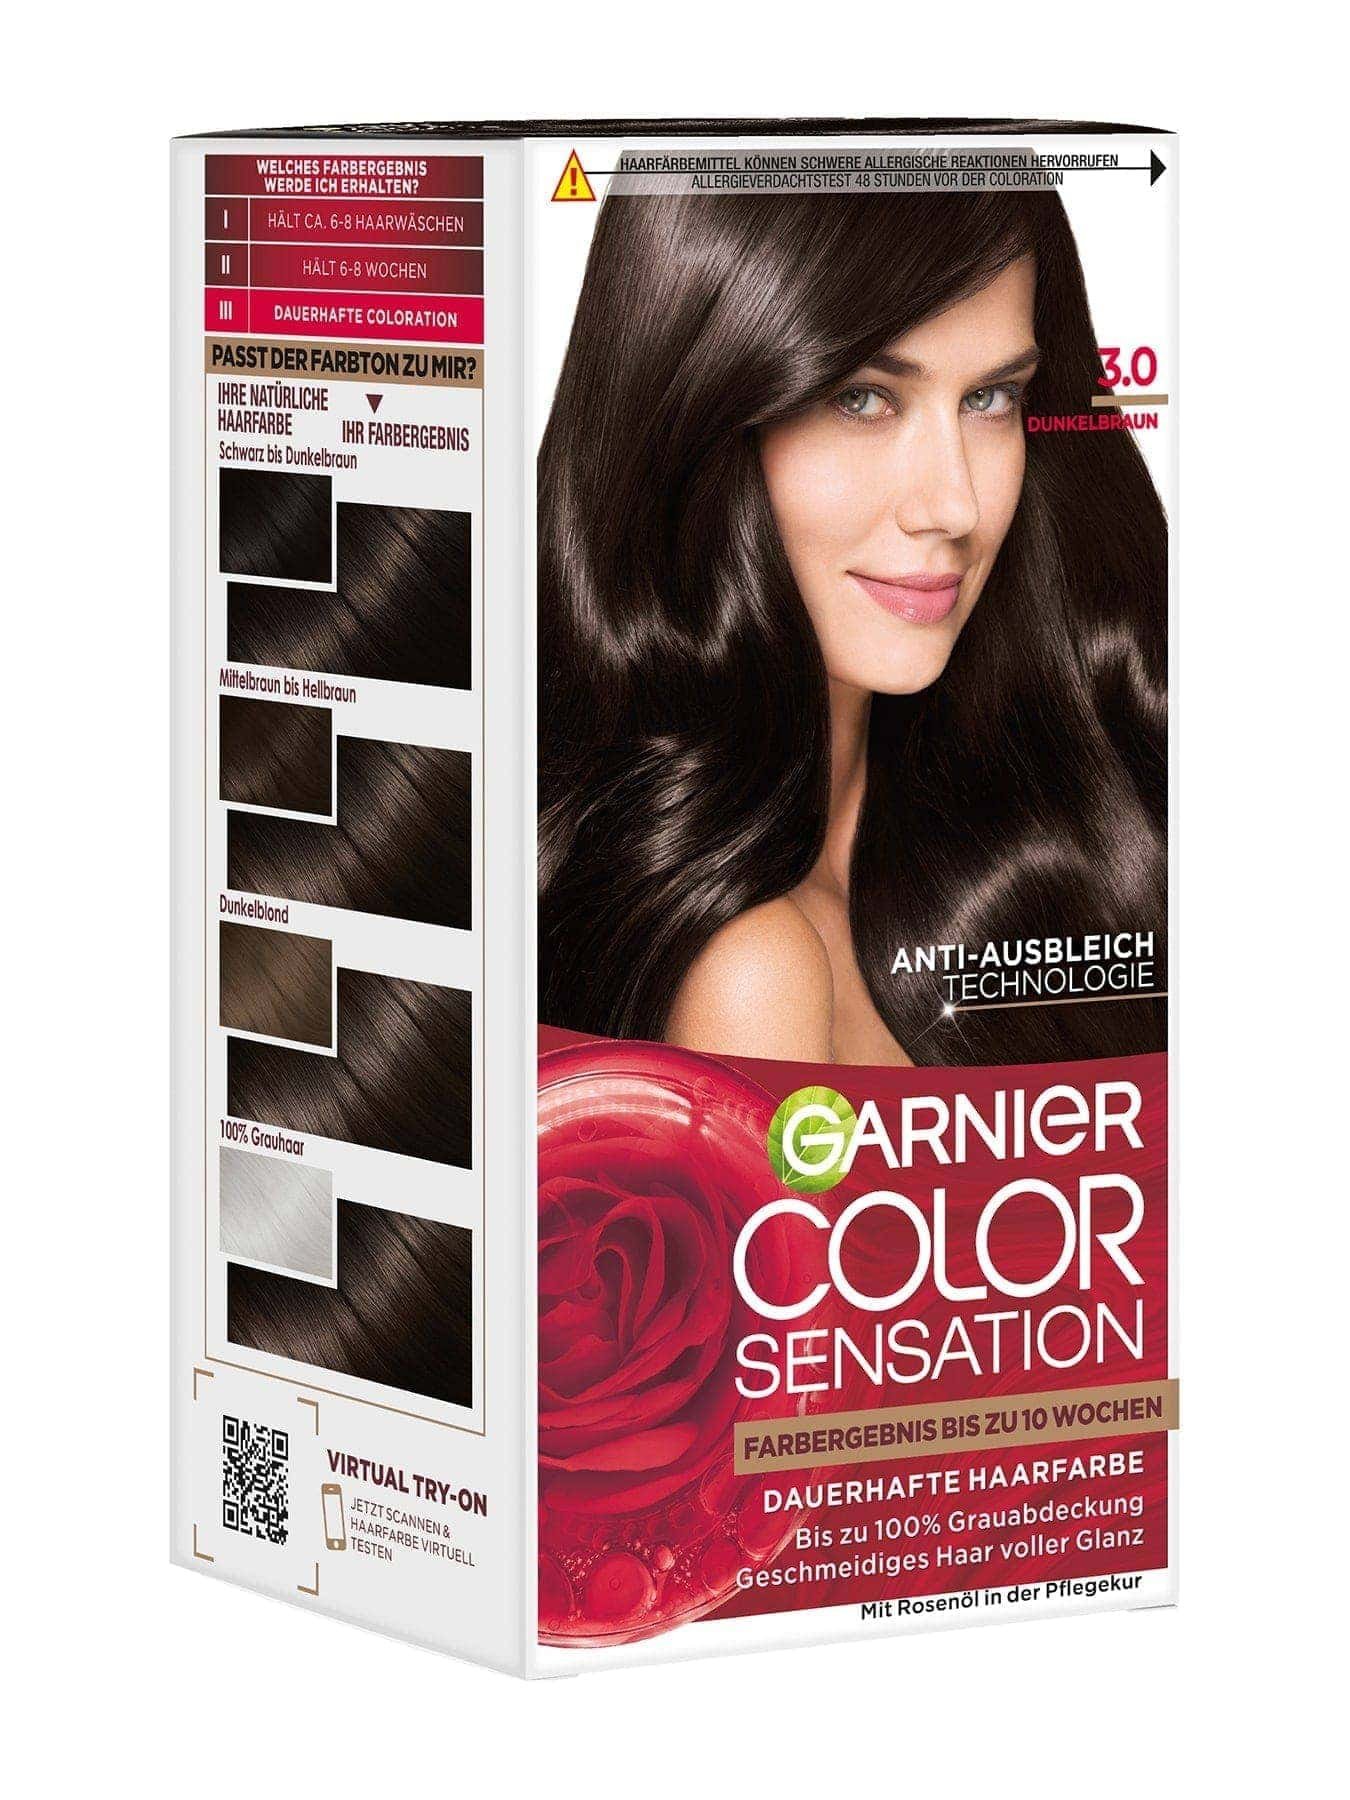 Color Sensation dauerhafte Haarfarbe 3.0 Dunkelbraun Produktbild